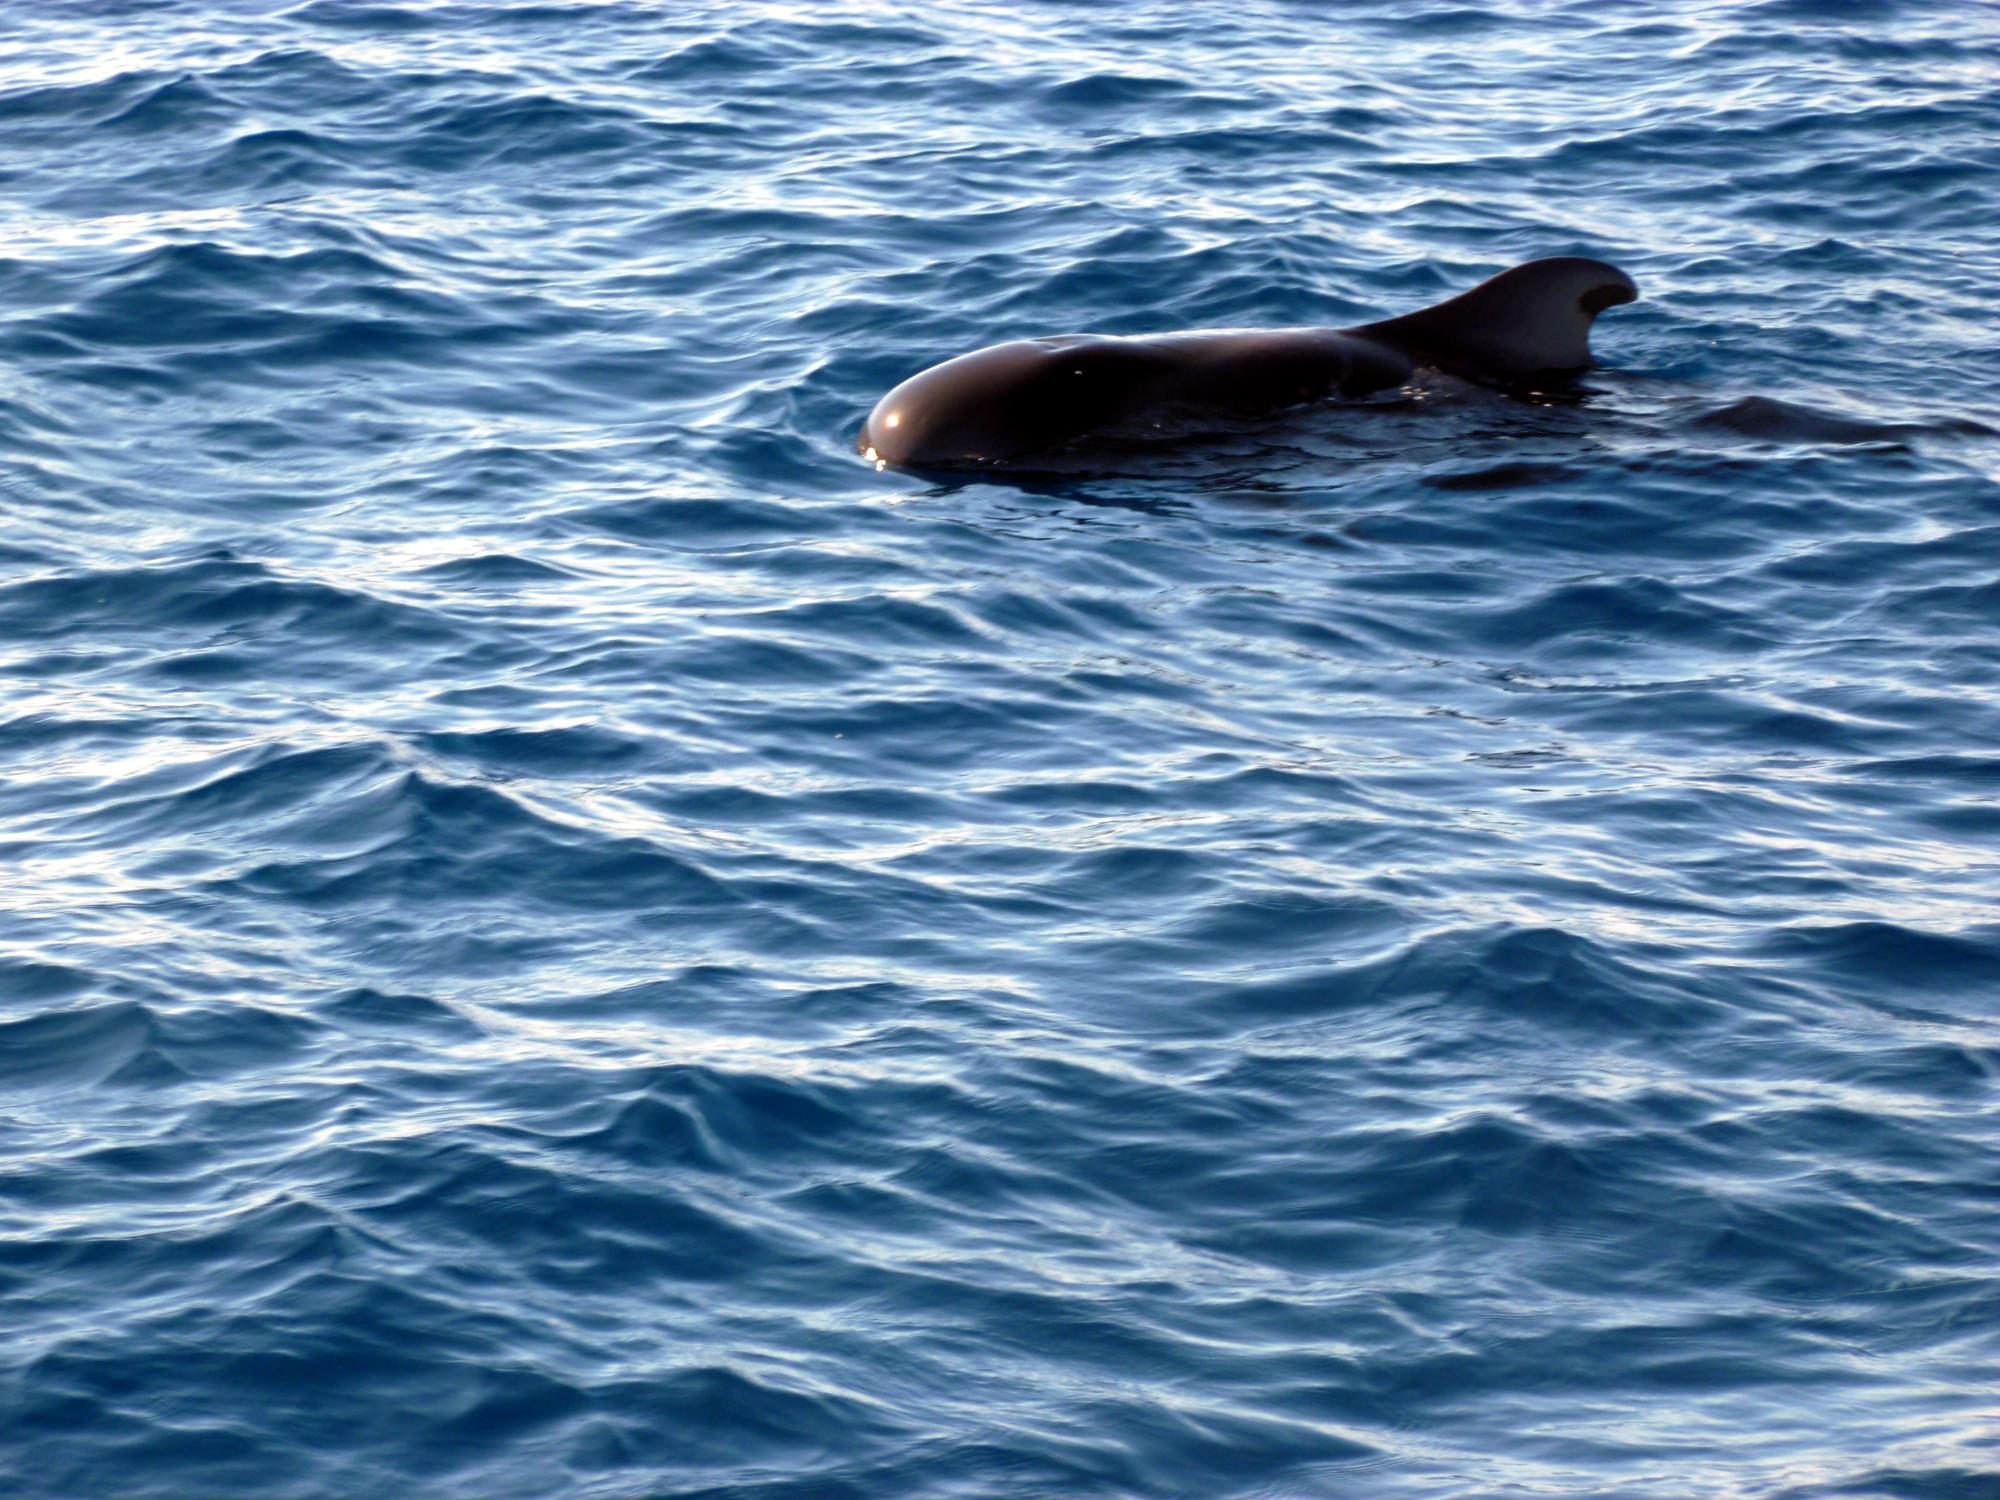  Canary Islands - Whale #2